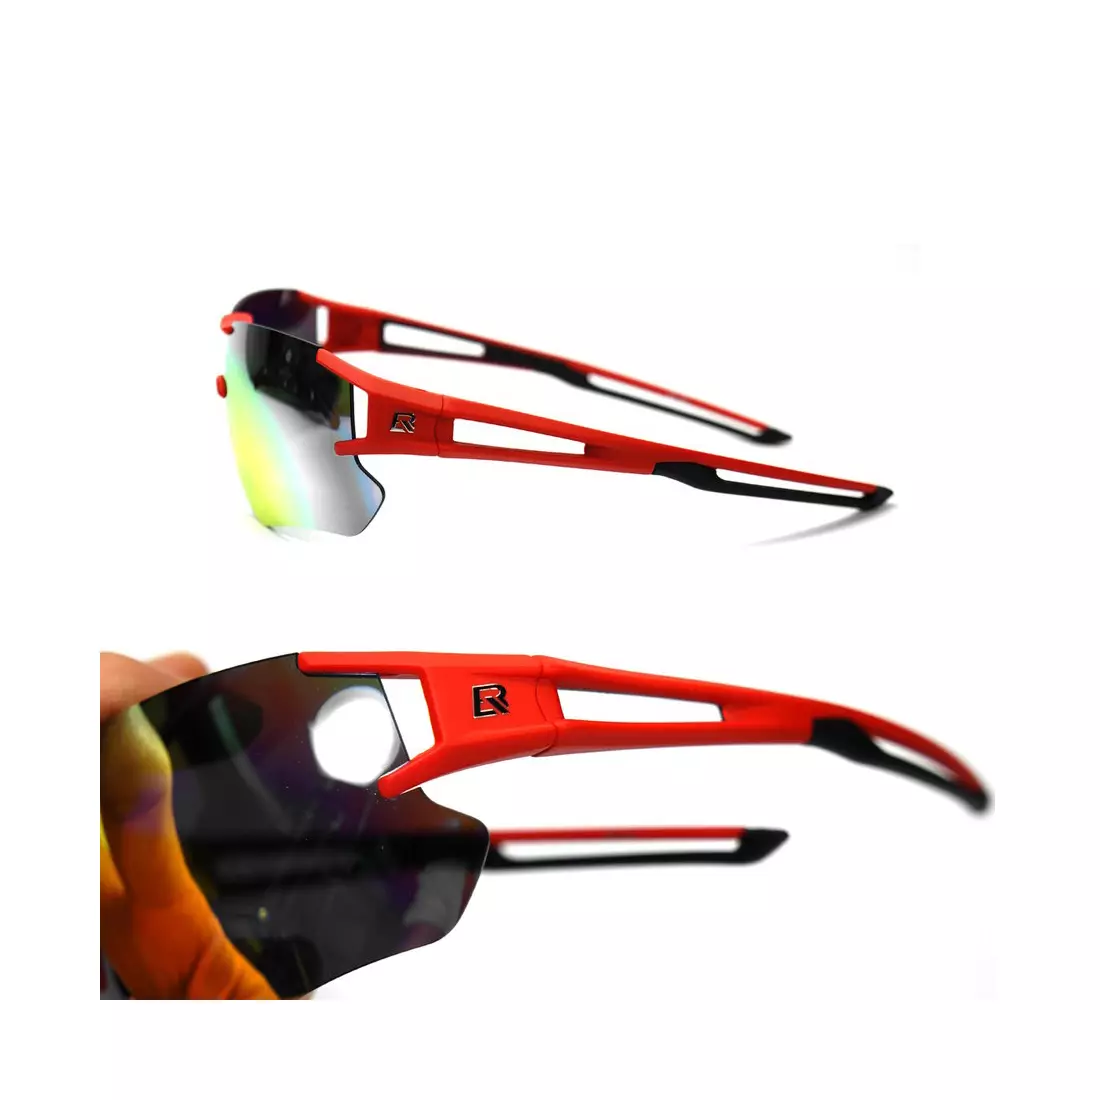 Rockbros 10128 Fahrrad Sportbrille mit polarisiertem black-red